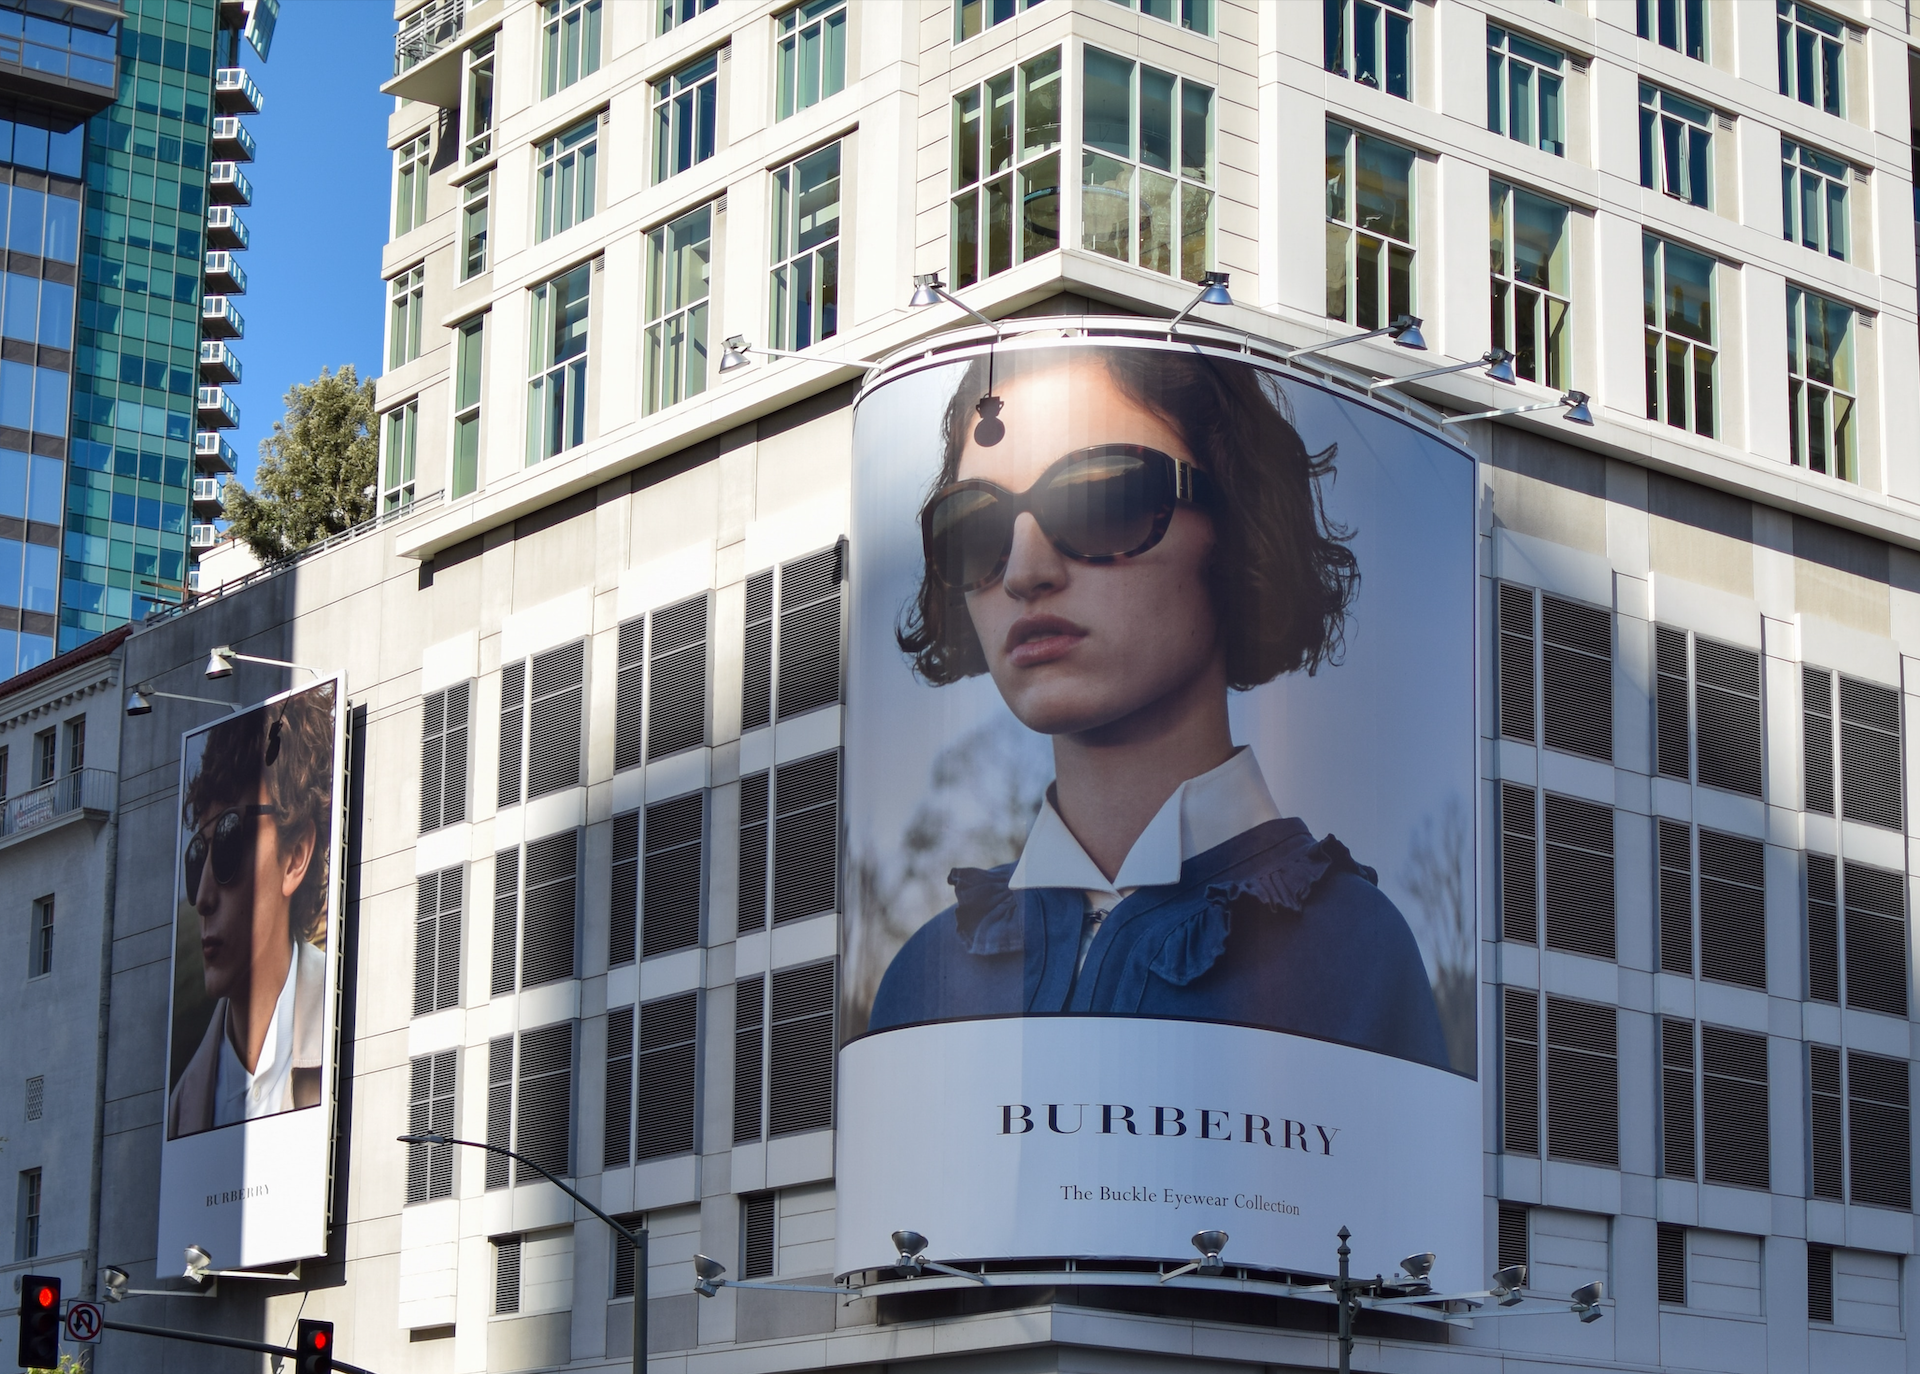 burberry billboard on a building